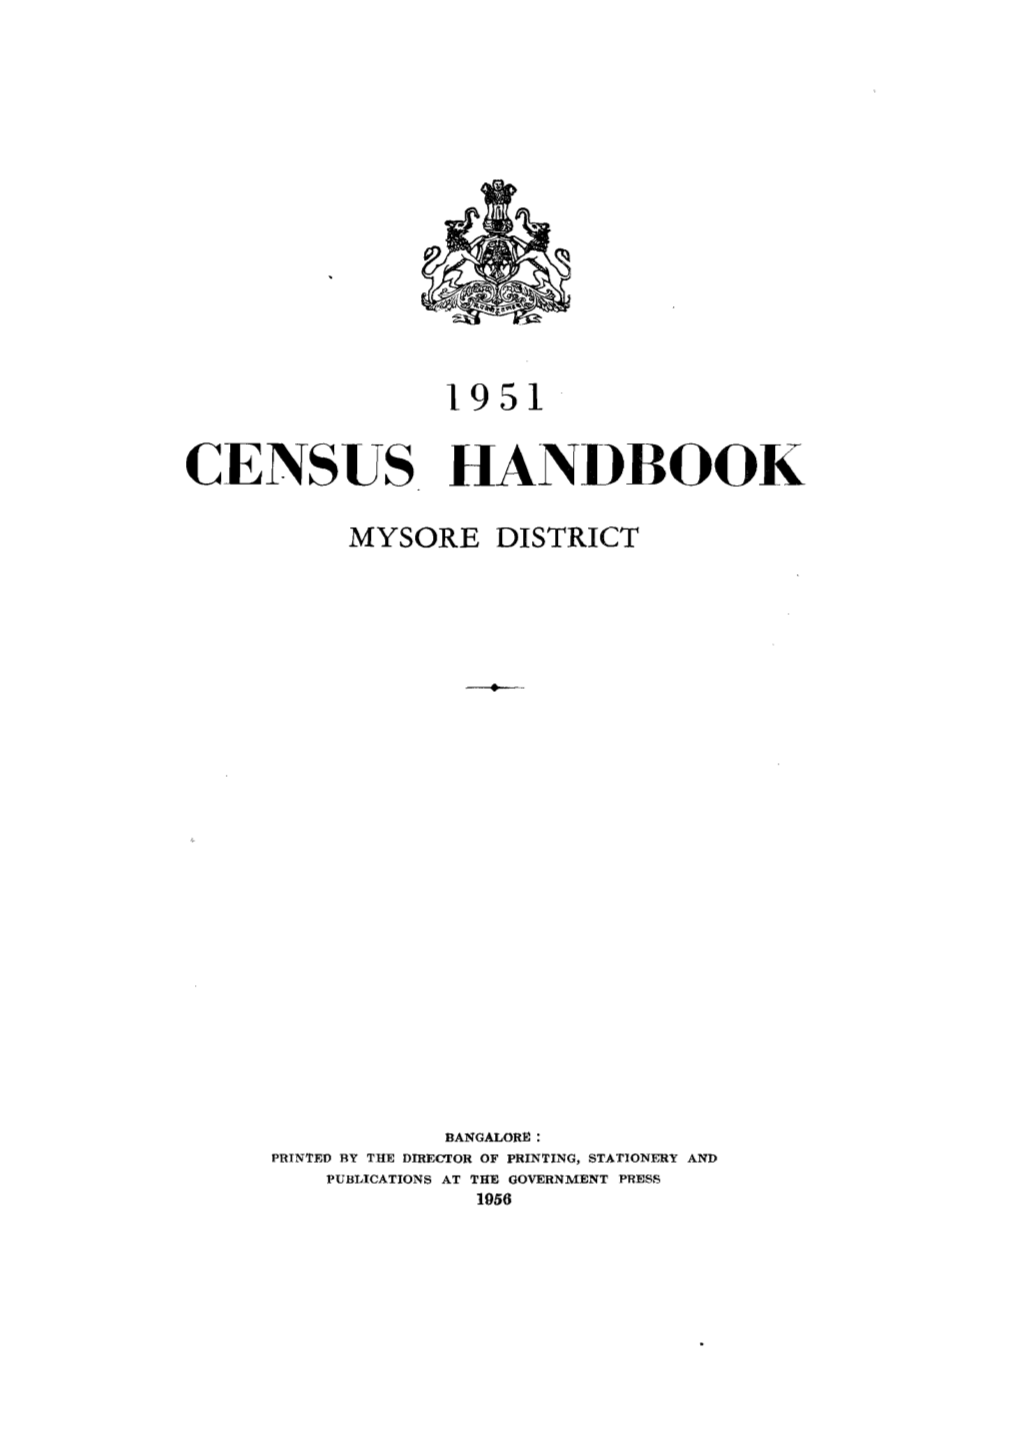 Census Handbook, Mysore